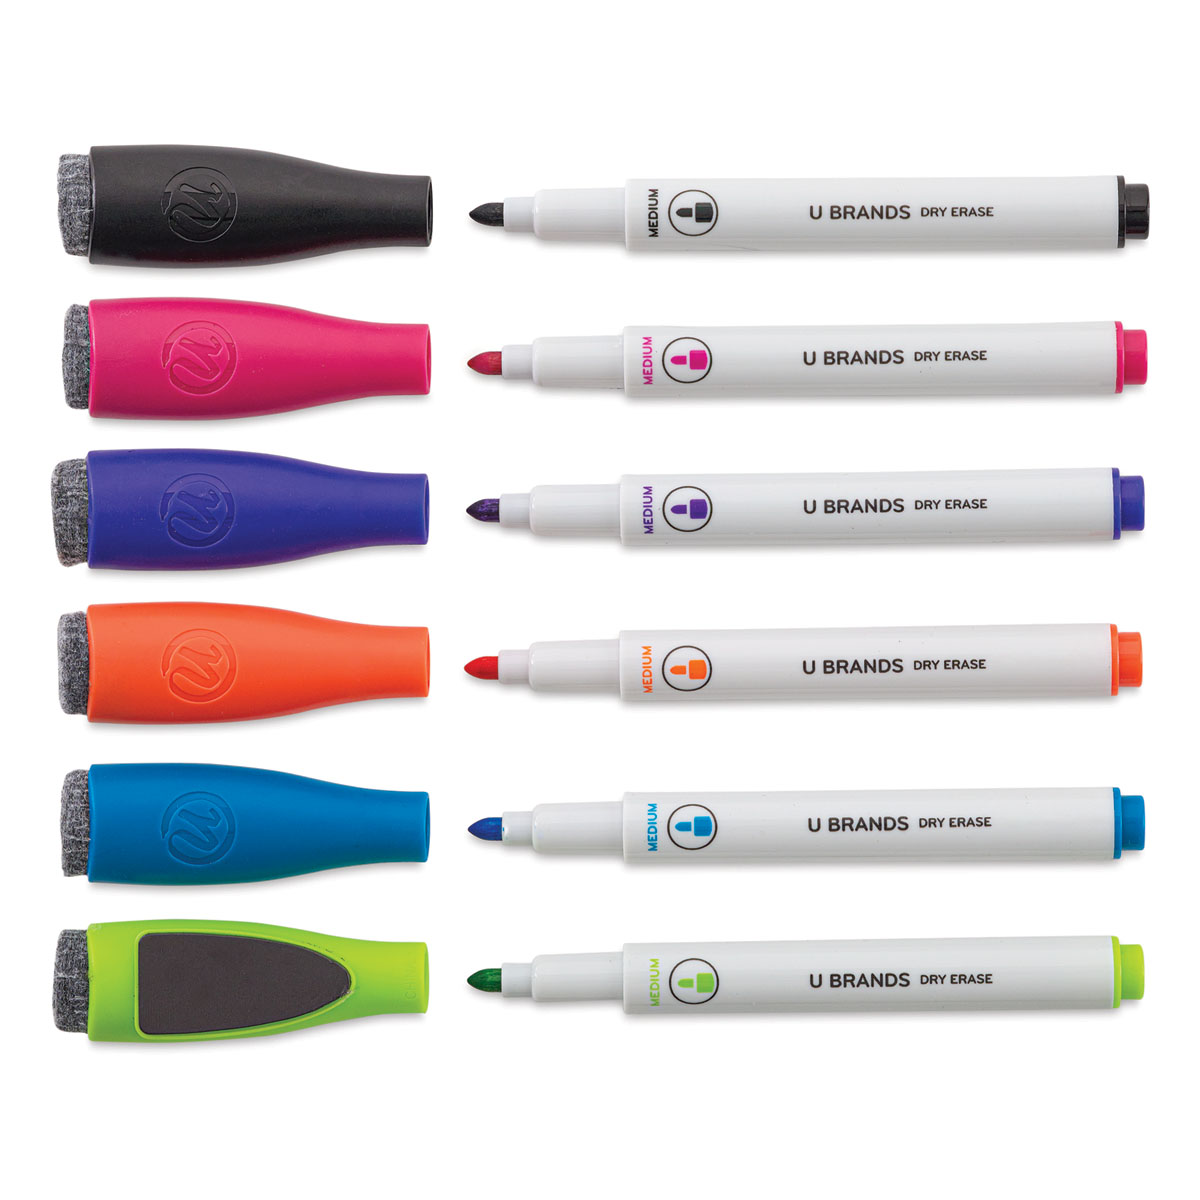 U Brands Medium Tip Dry Erase Markers with Built-In Erasers